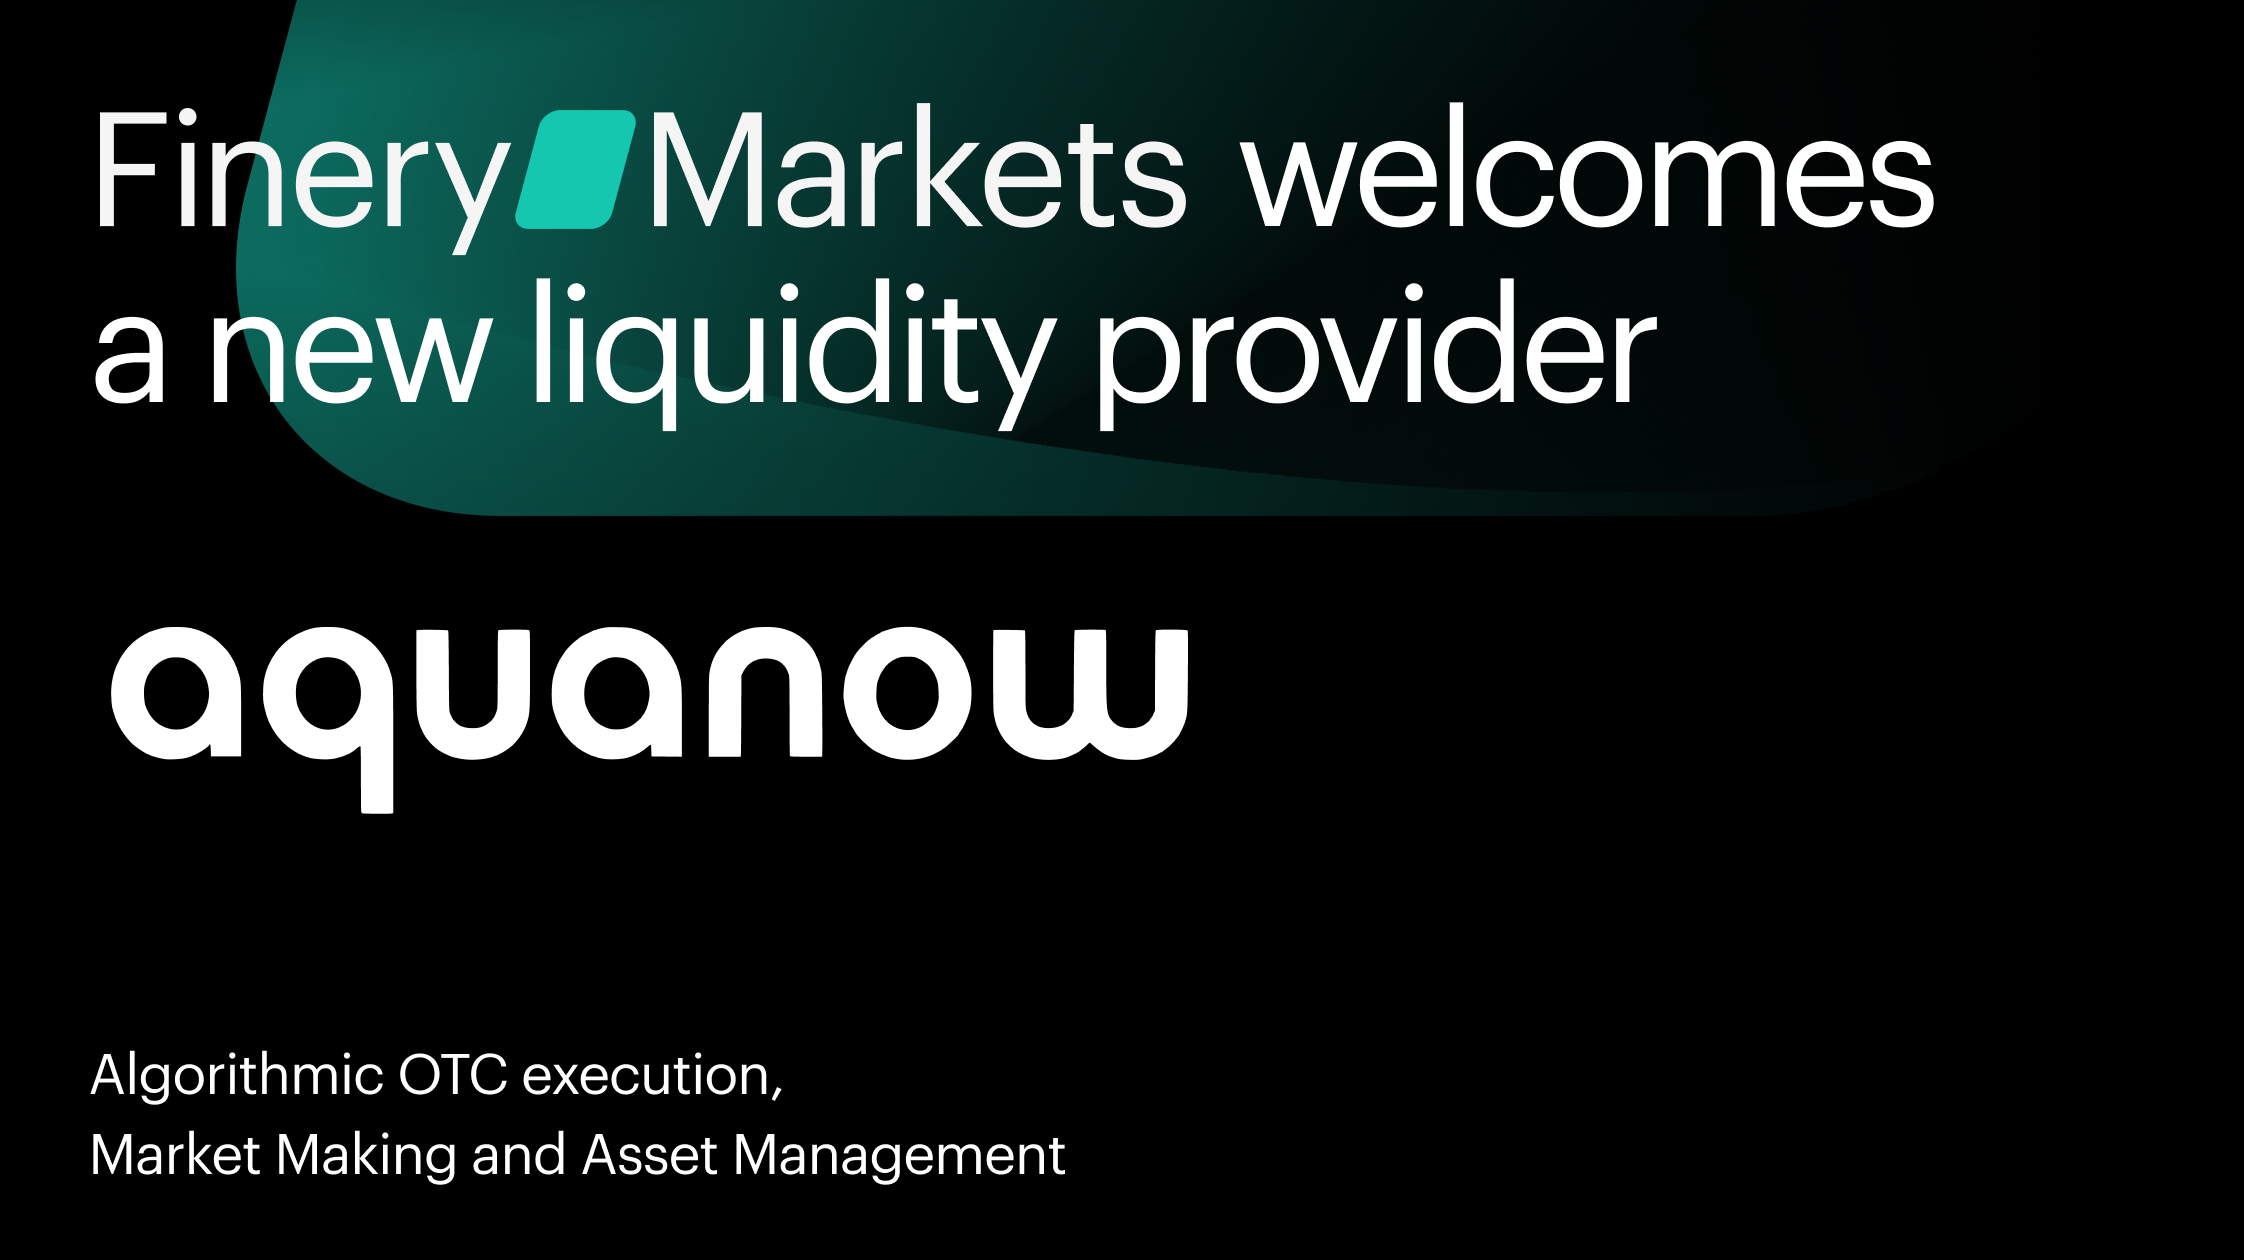 Aquanow started streaming liquidity via Finery Markets